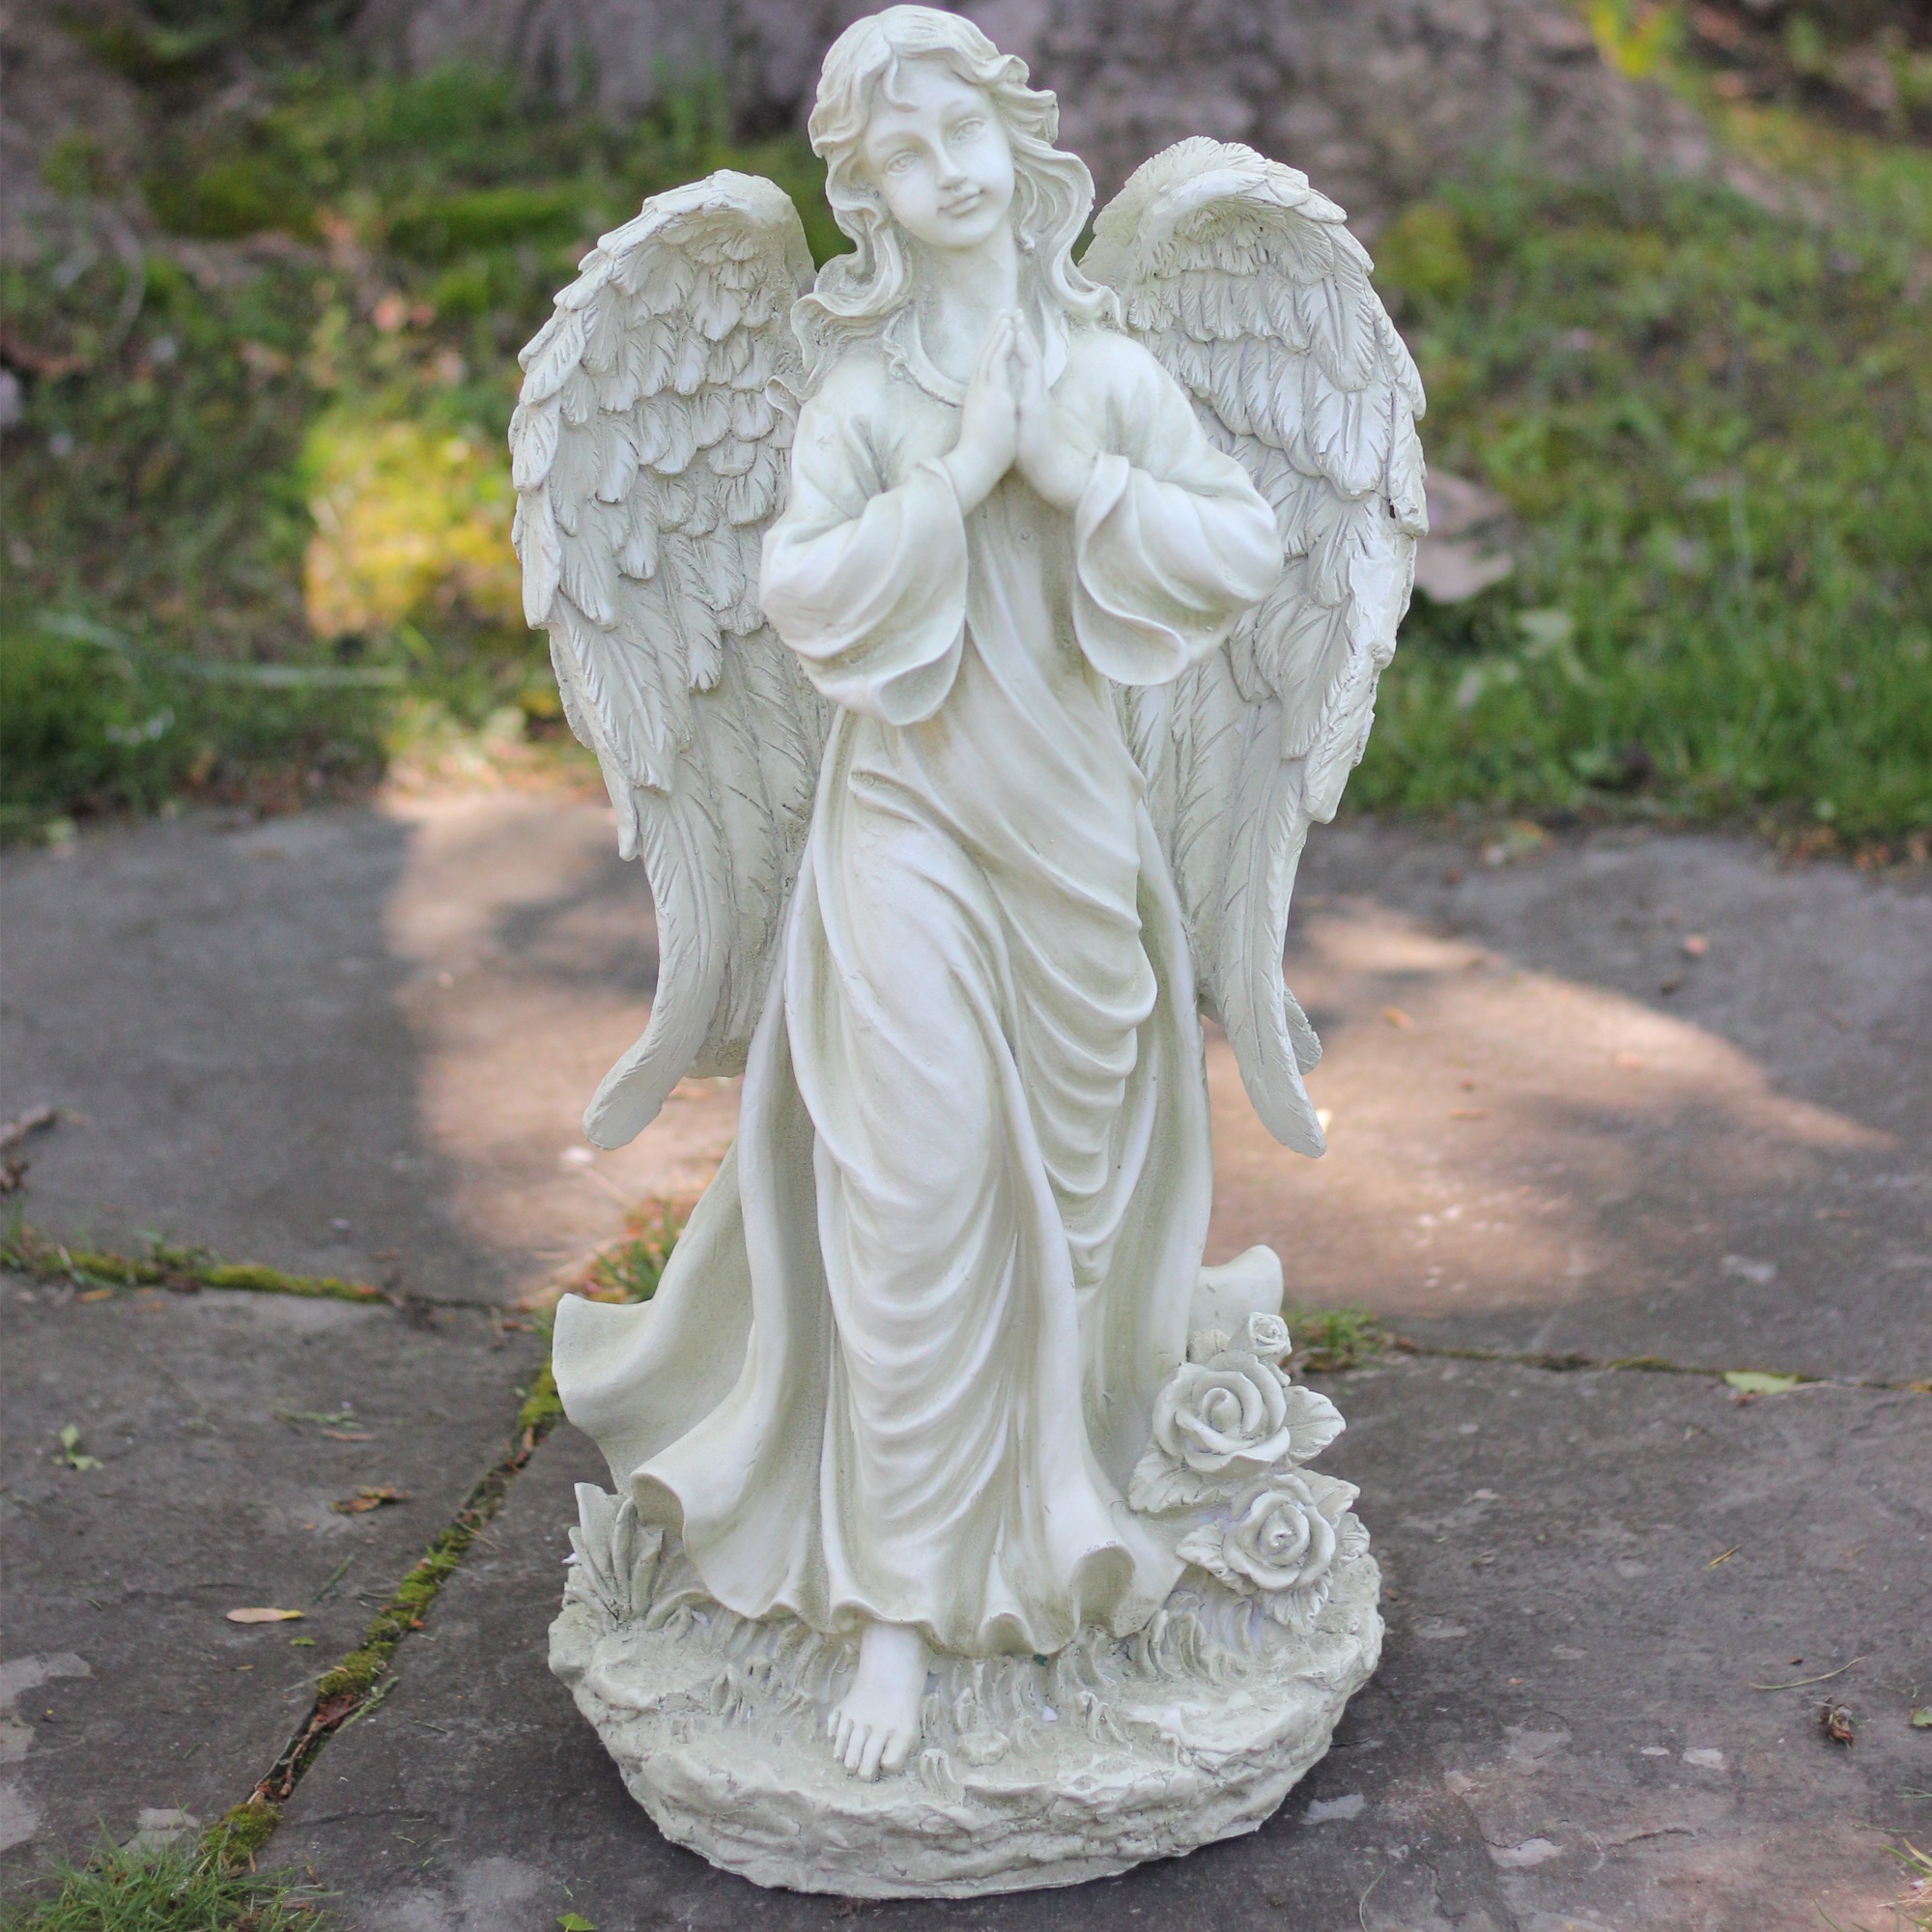 Northlight 24.5" Light Olive Green Praying Angel Decorative Outdoor Garden Statue - image 2 of 6